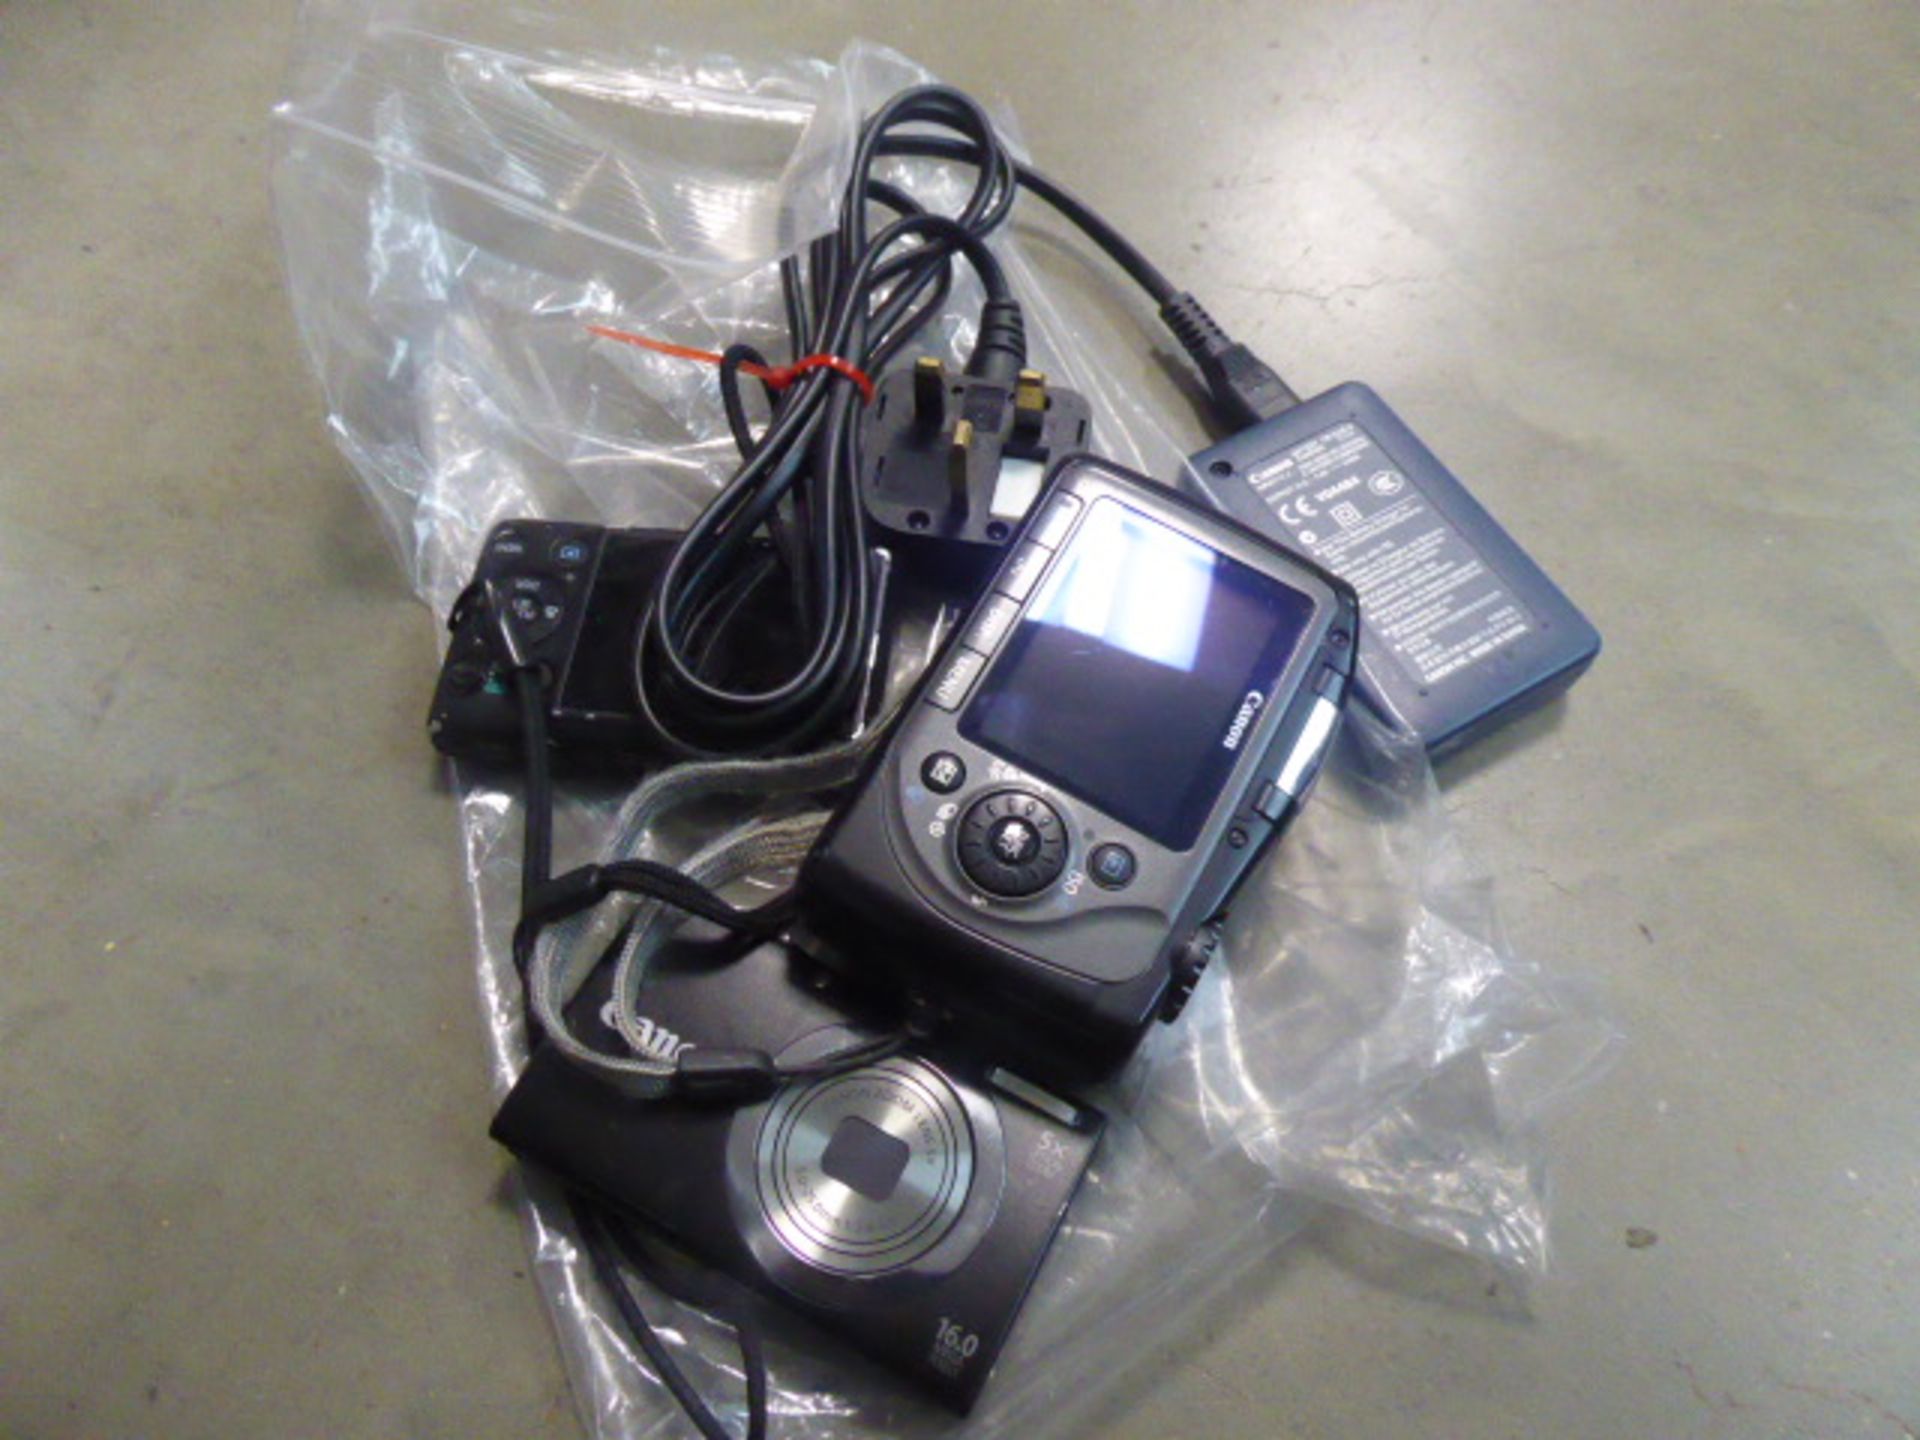 Canon PC 1256 digital camera and a Canon PC 1732 digital camera with loose accessories